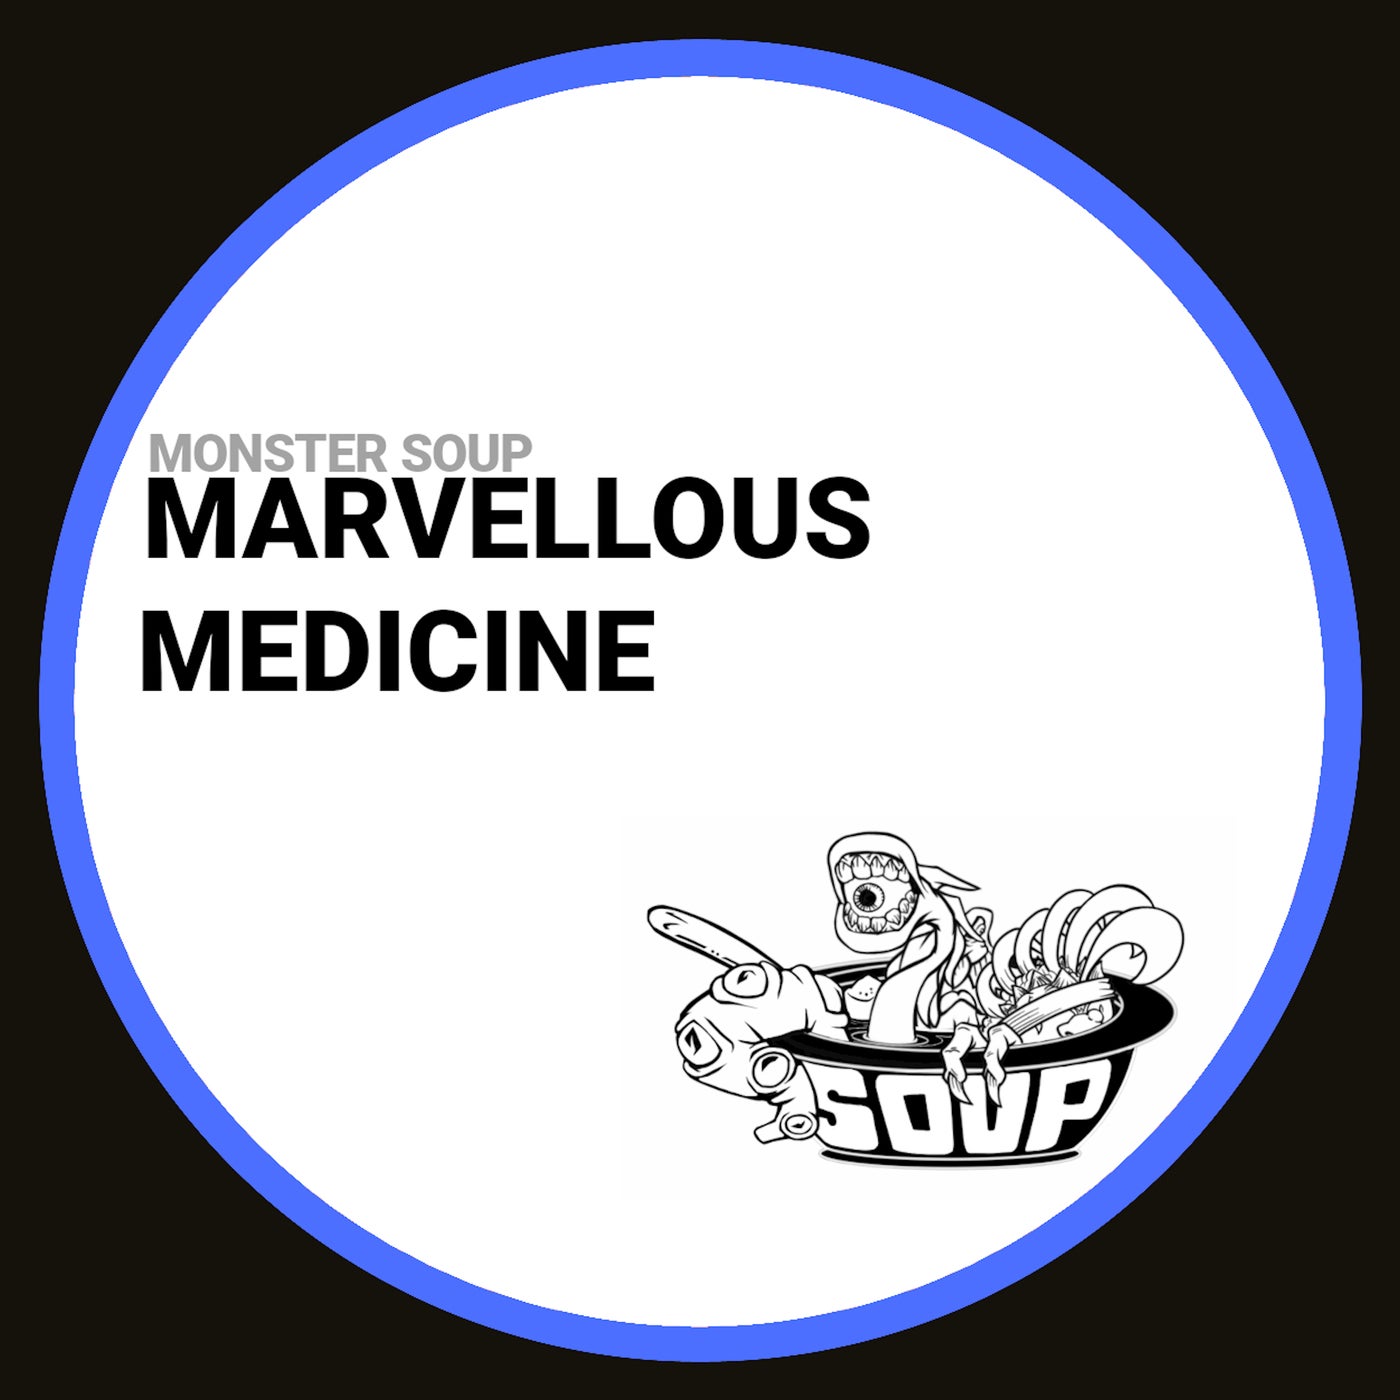 Marvellous Medicine